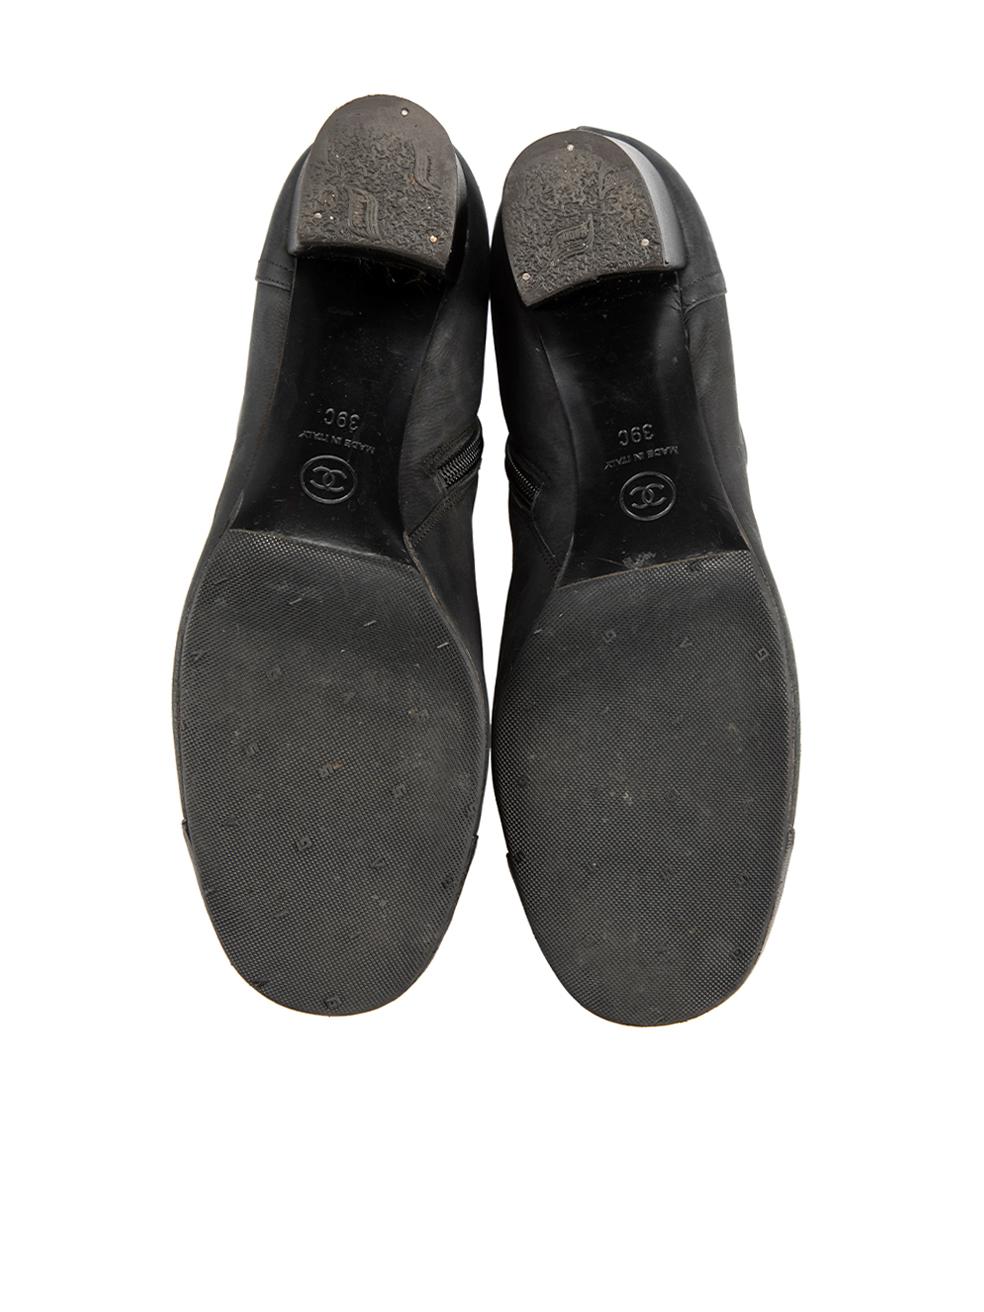 Women's Chanel Black Leather Cap Toe Ankle Boots Size IT 39